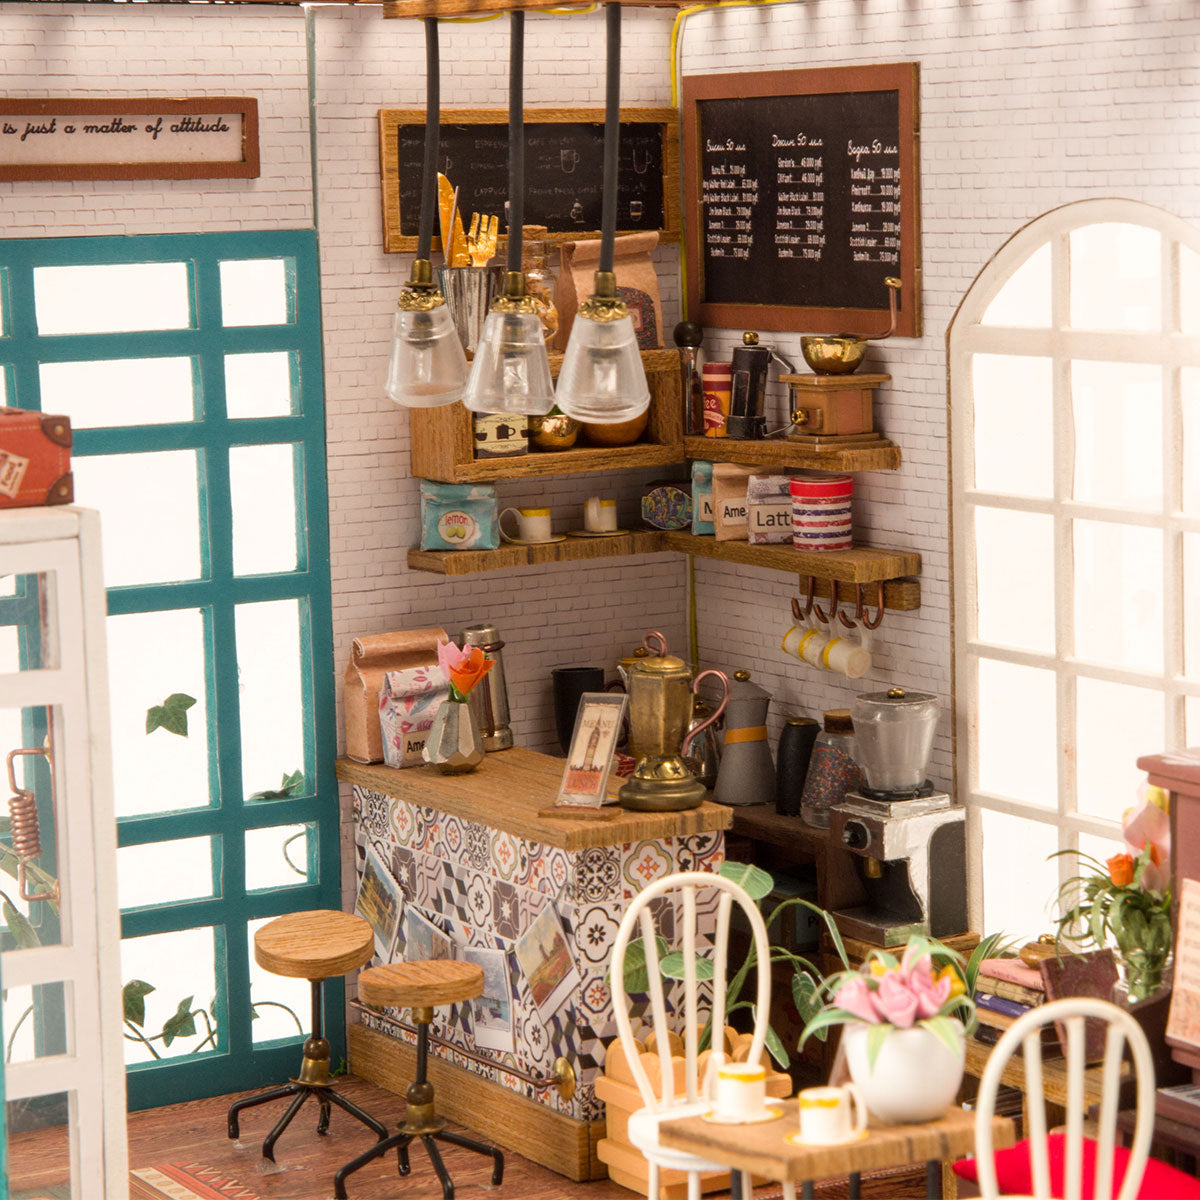 Simon's Coffee Shop-Miniature House-Robotime--